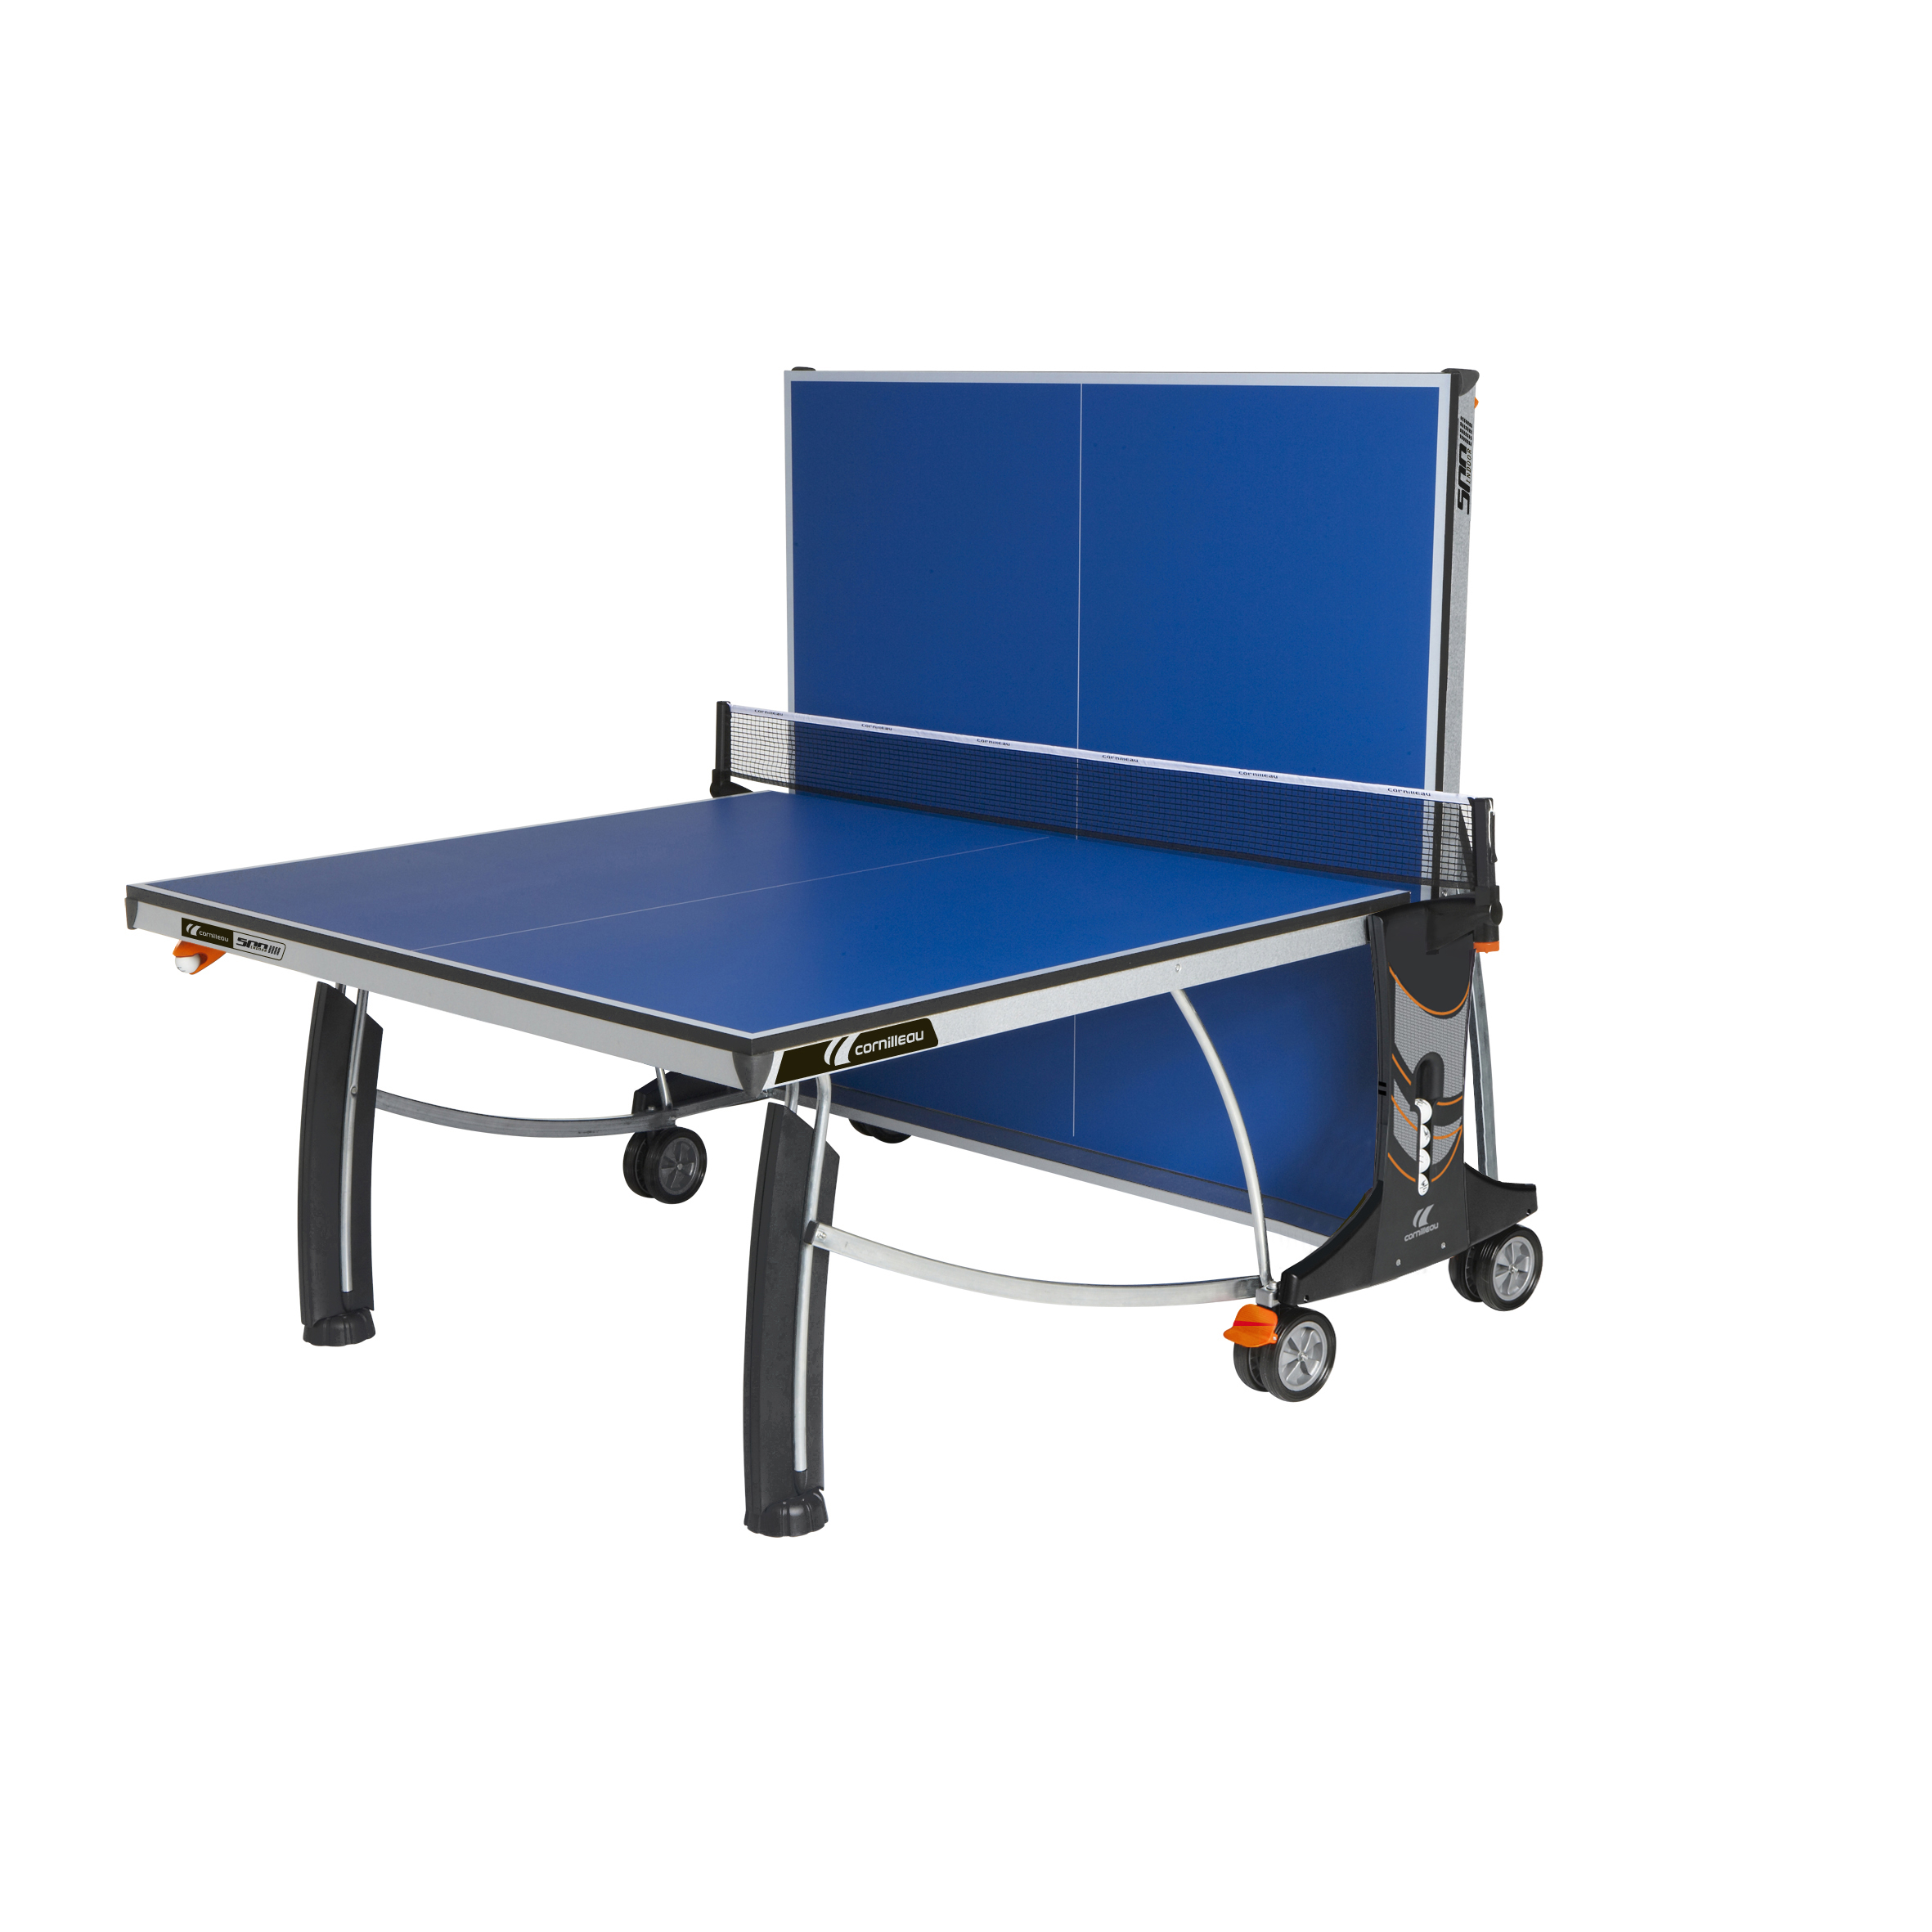 doen alsof tong Zwaaien Cornilleau Sport 500 Indoor Ping Pong Table – Blue – SOUTH BAY TABLE TENNIS